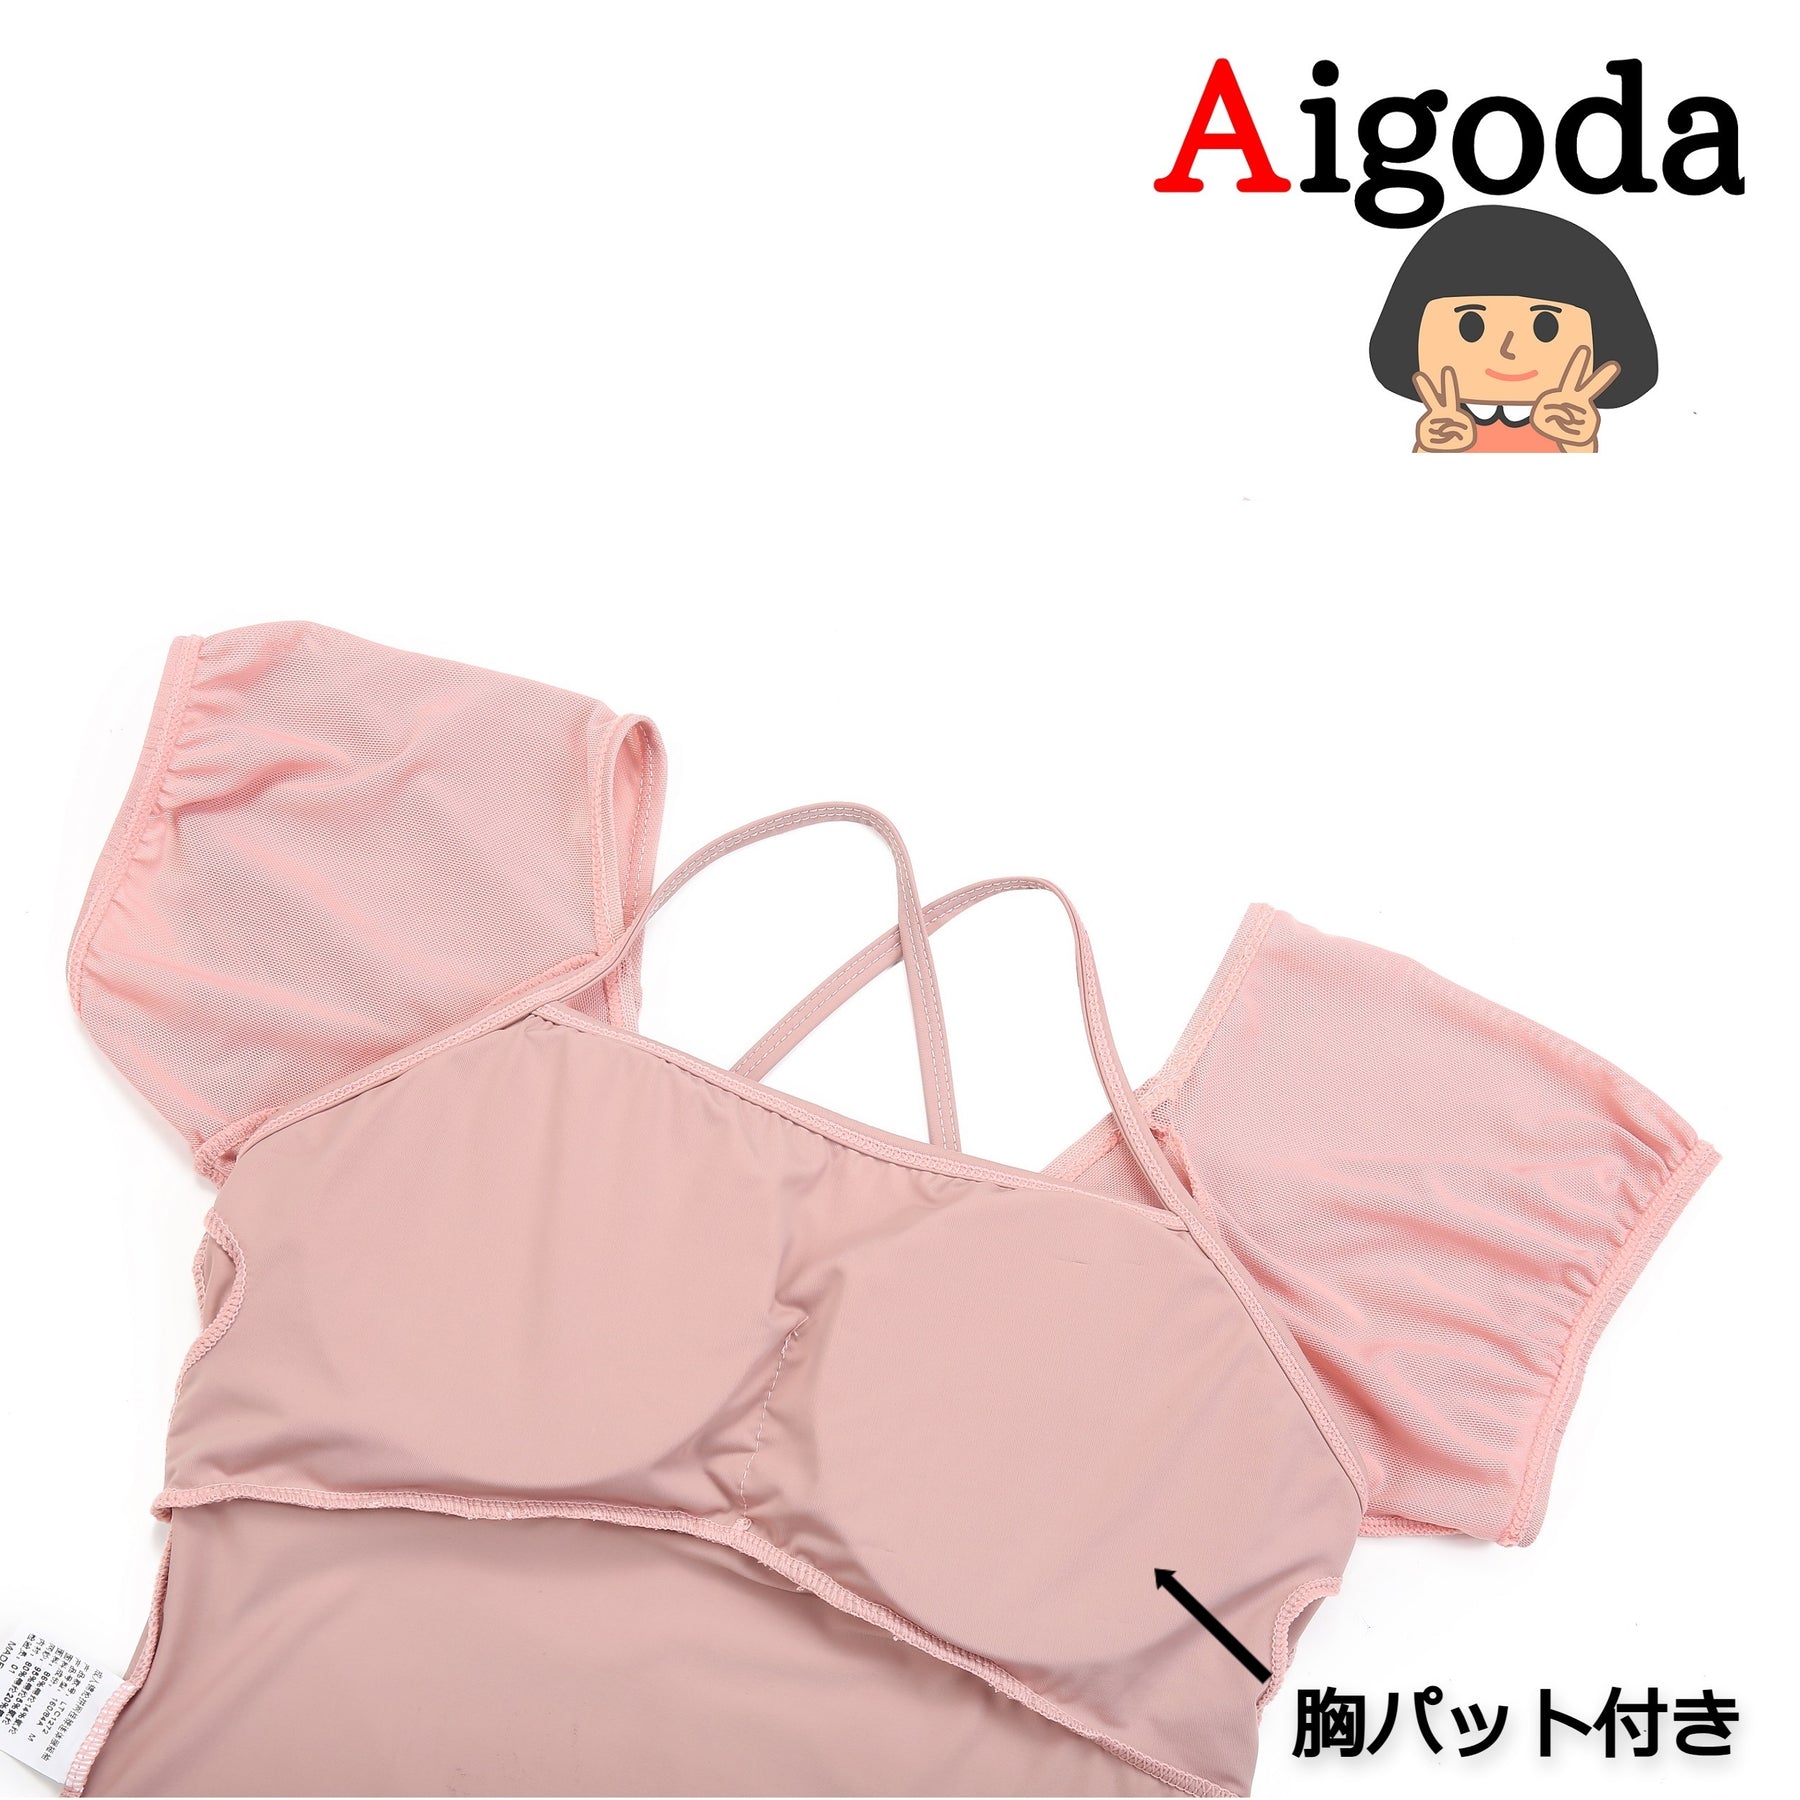 Aigoda】バレエ レオタード 大人用 胸パット付き2色 5サイズ 大きい 